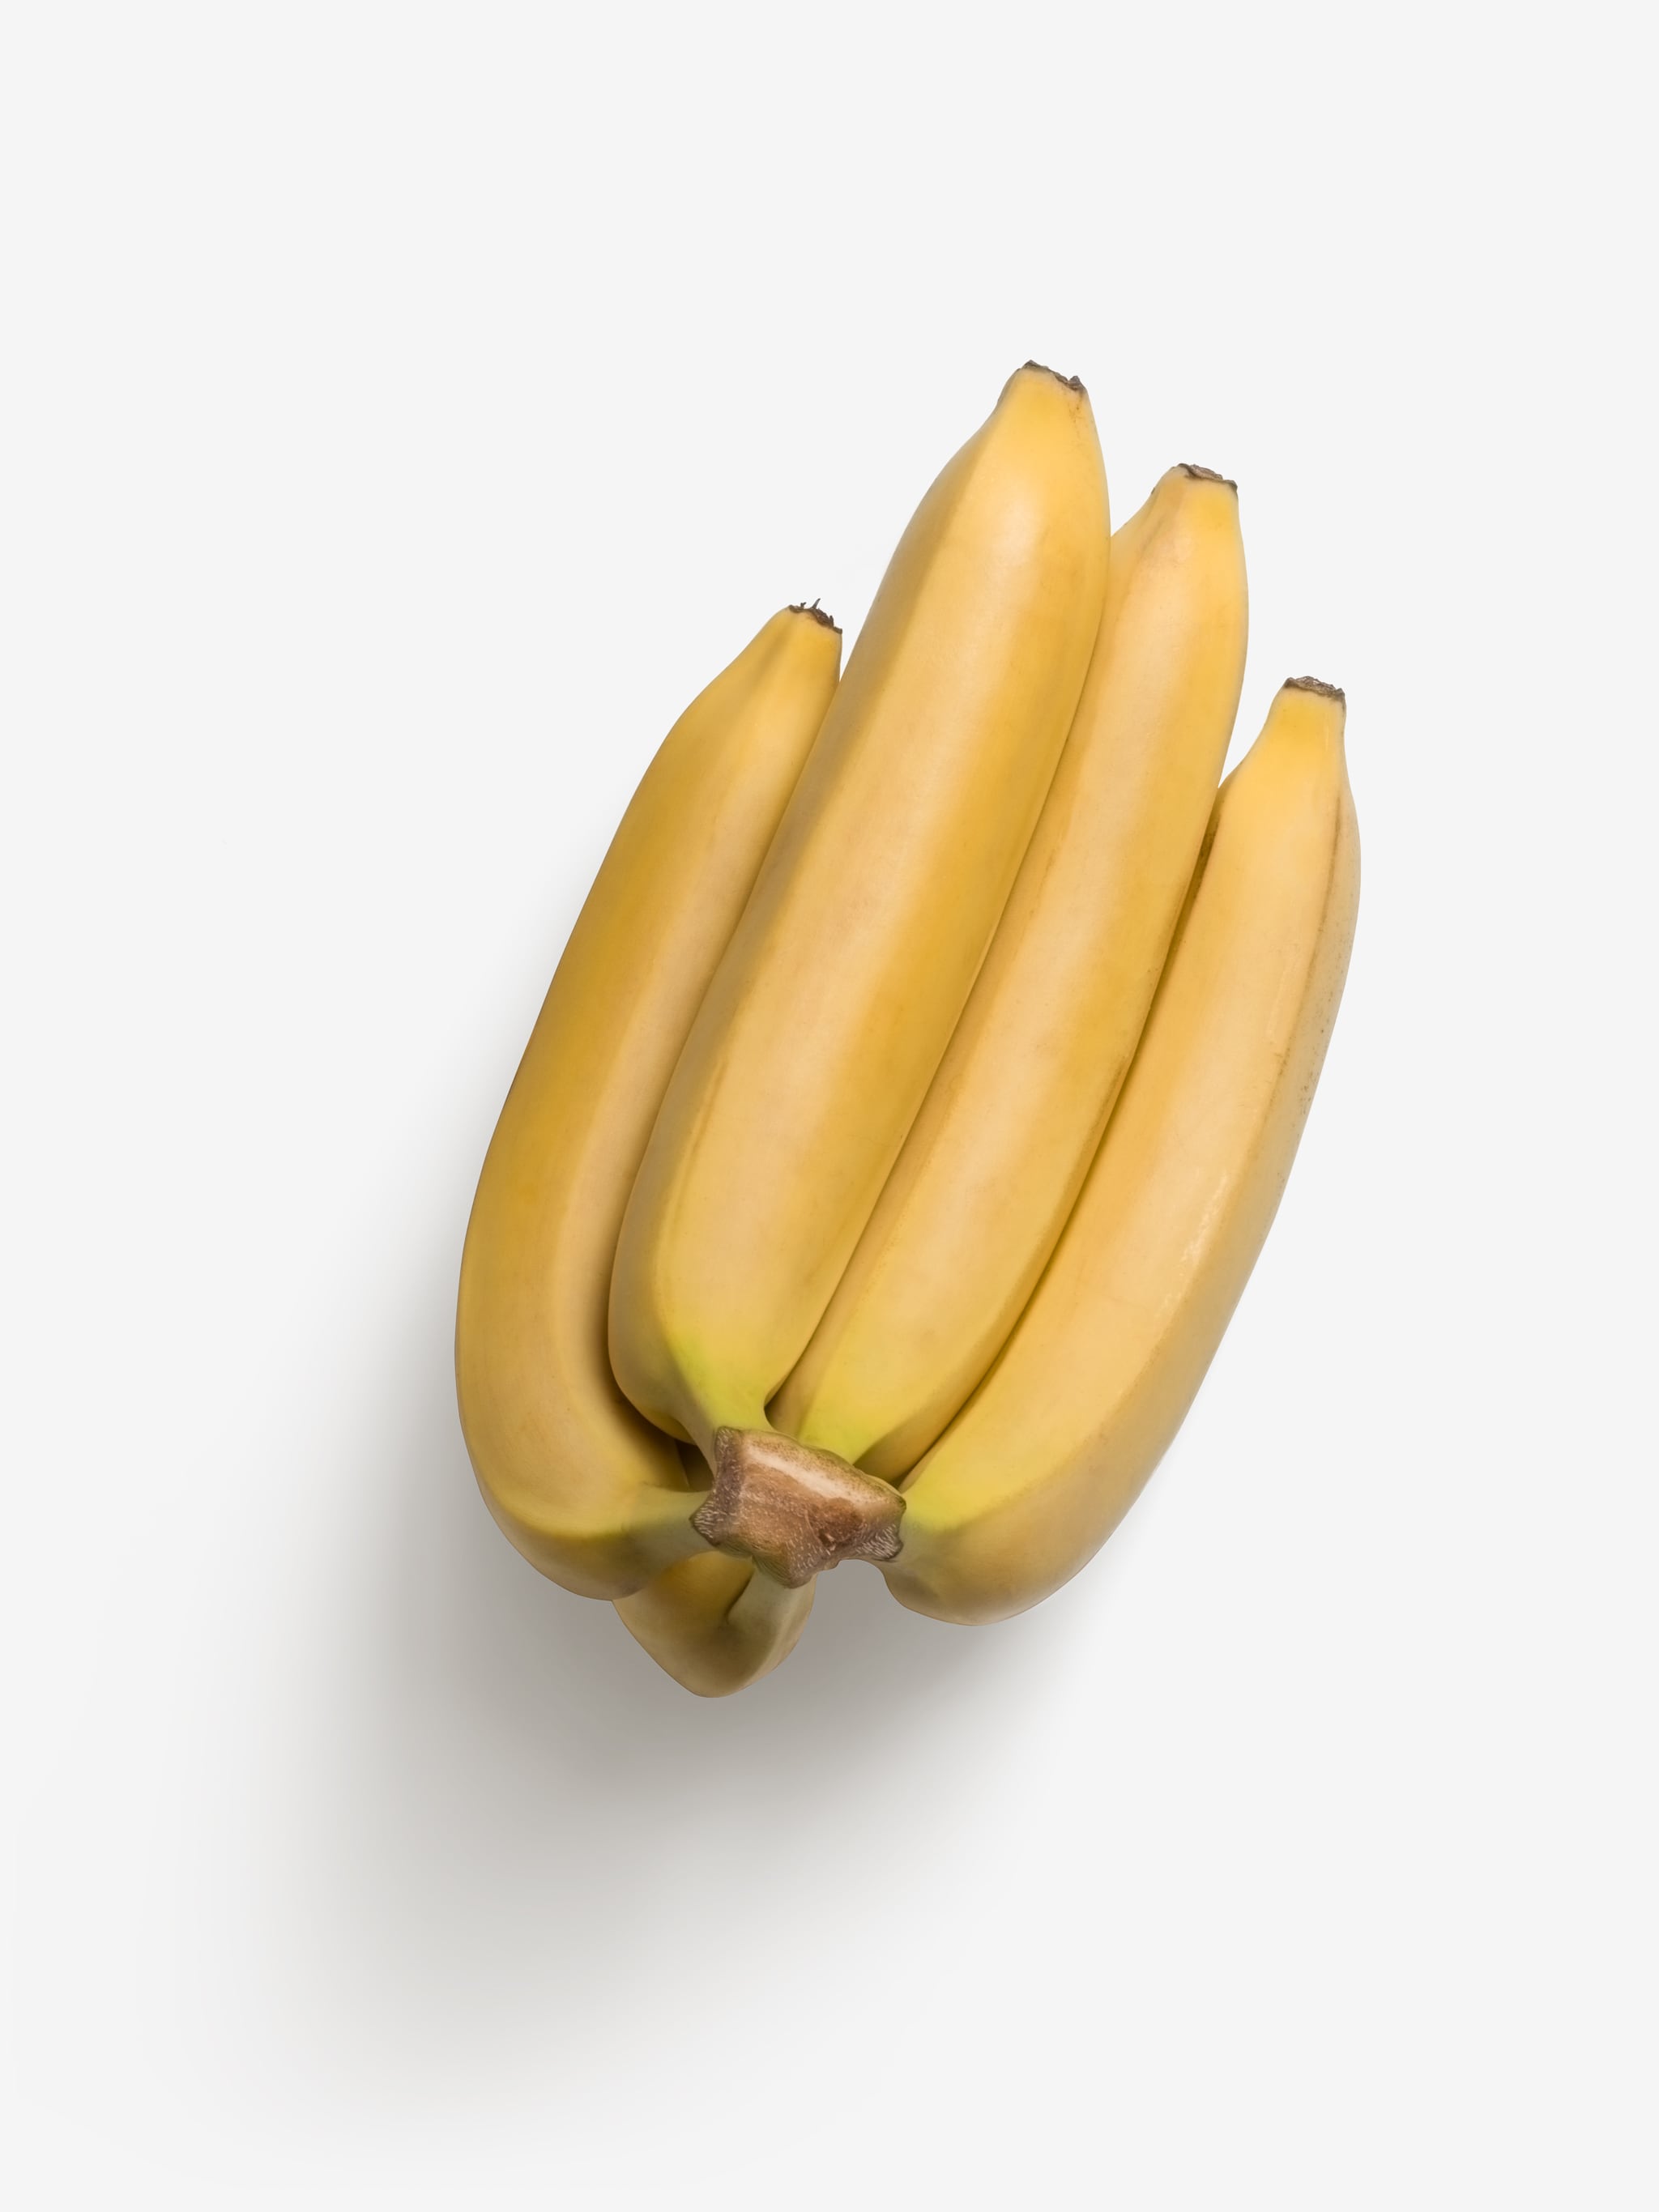 Banana image asset with transparent background